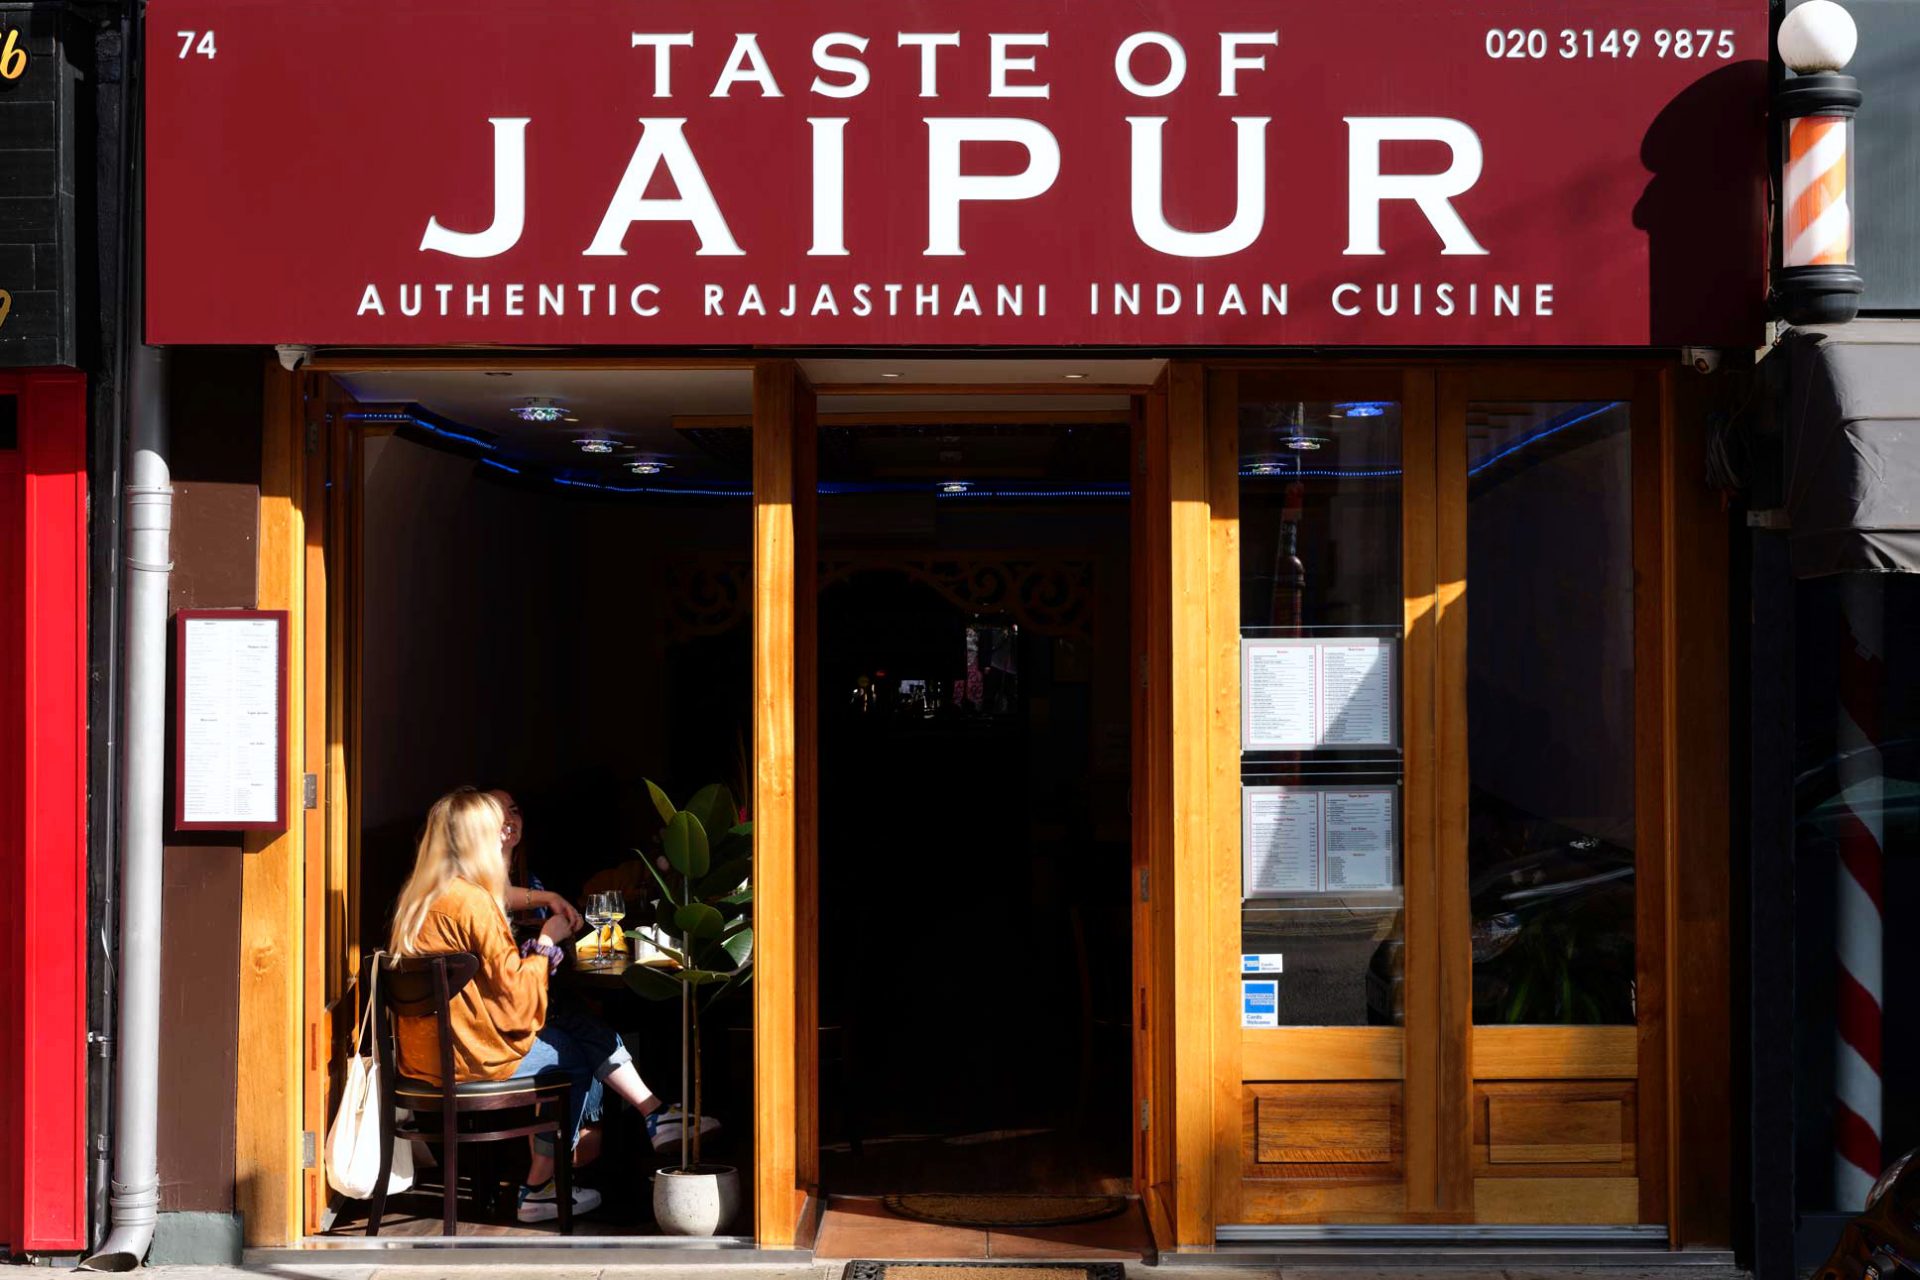 Jaipur restaurant, Brick Lane, East End of London.